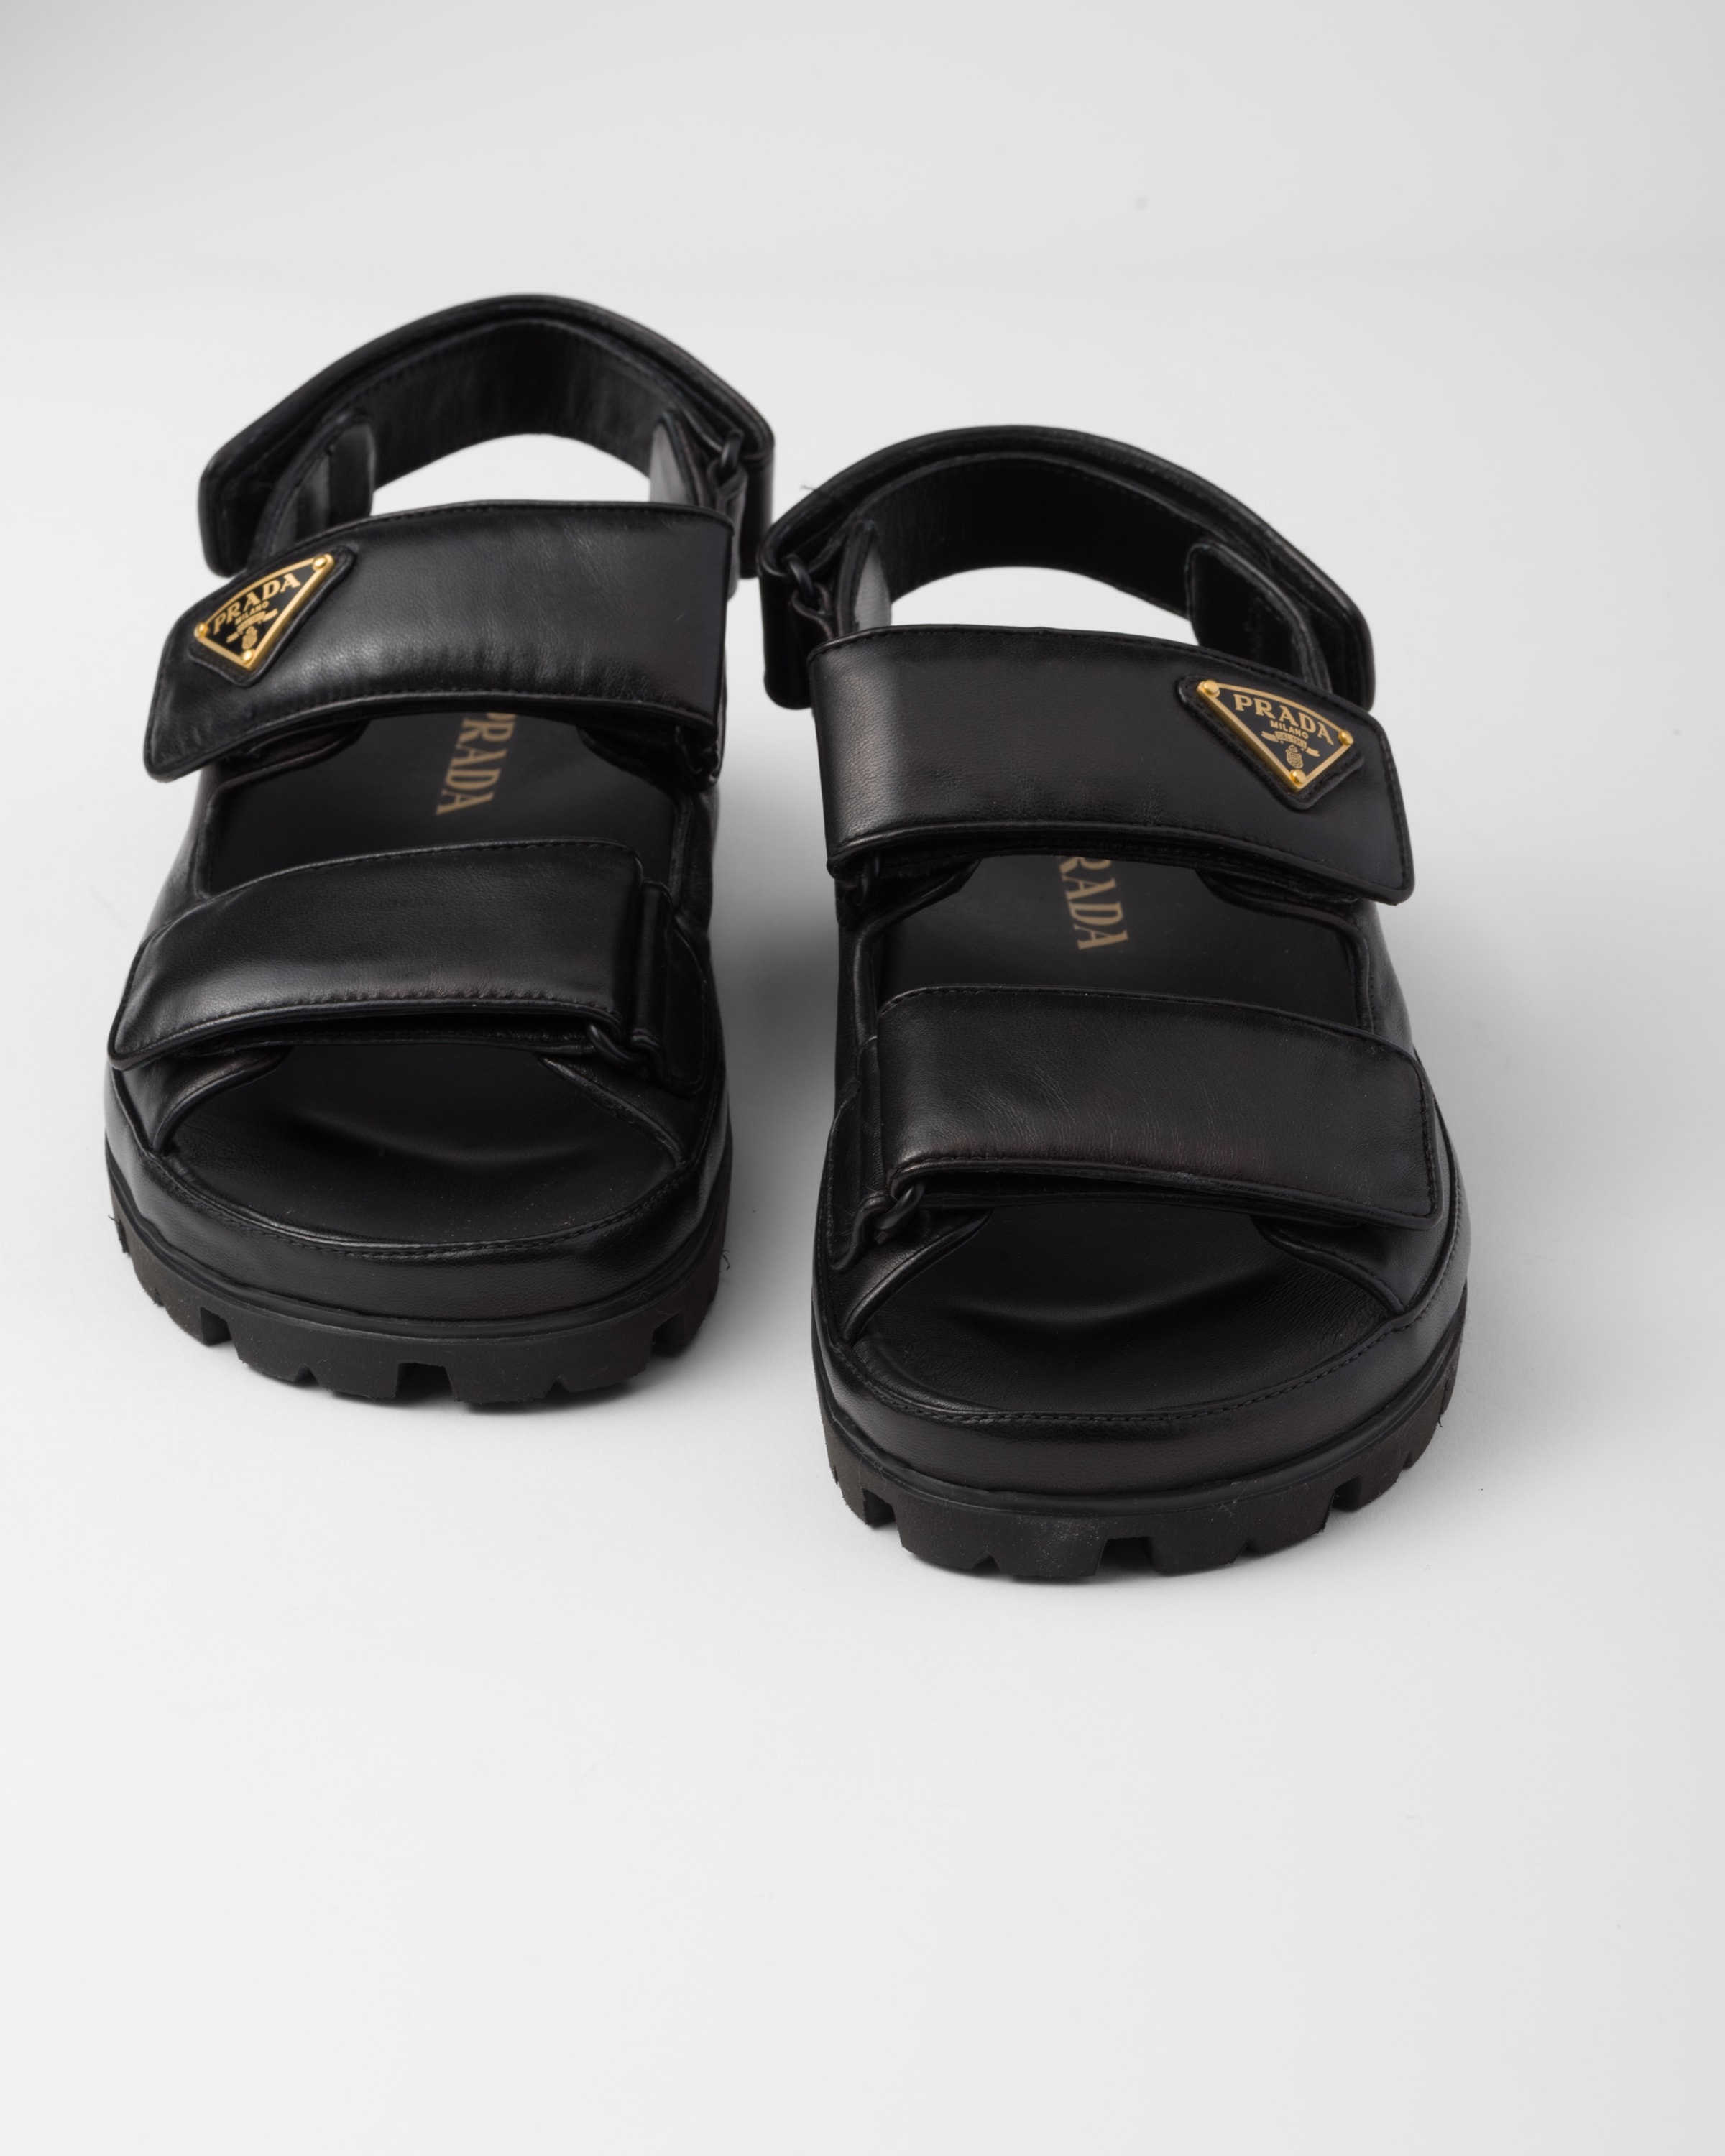 Flat nappa leather sandals - 5